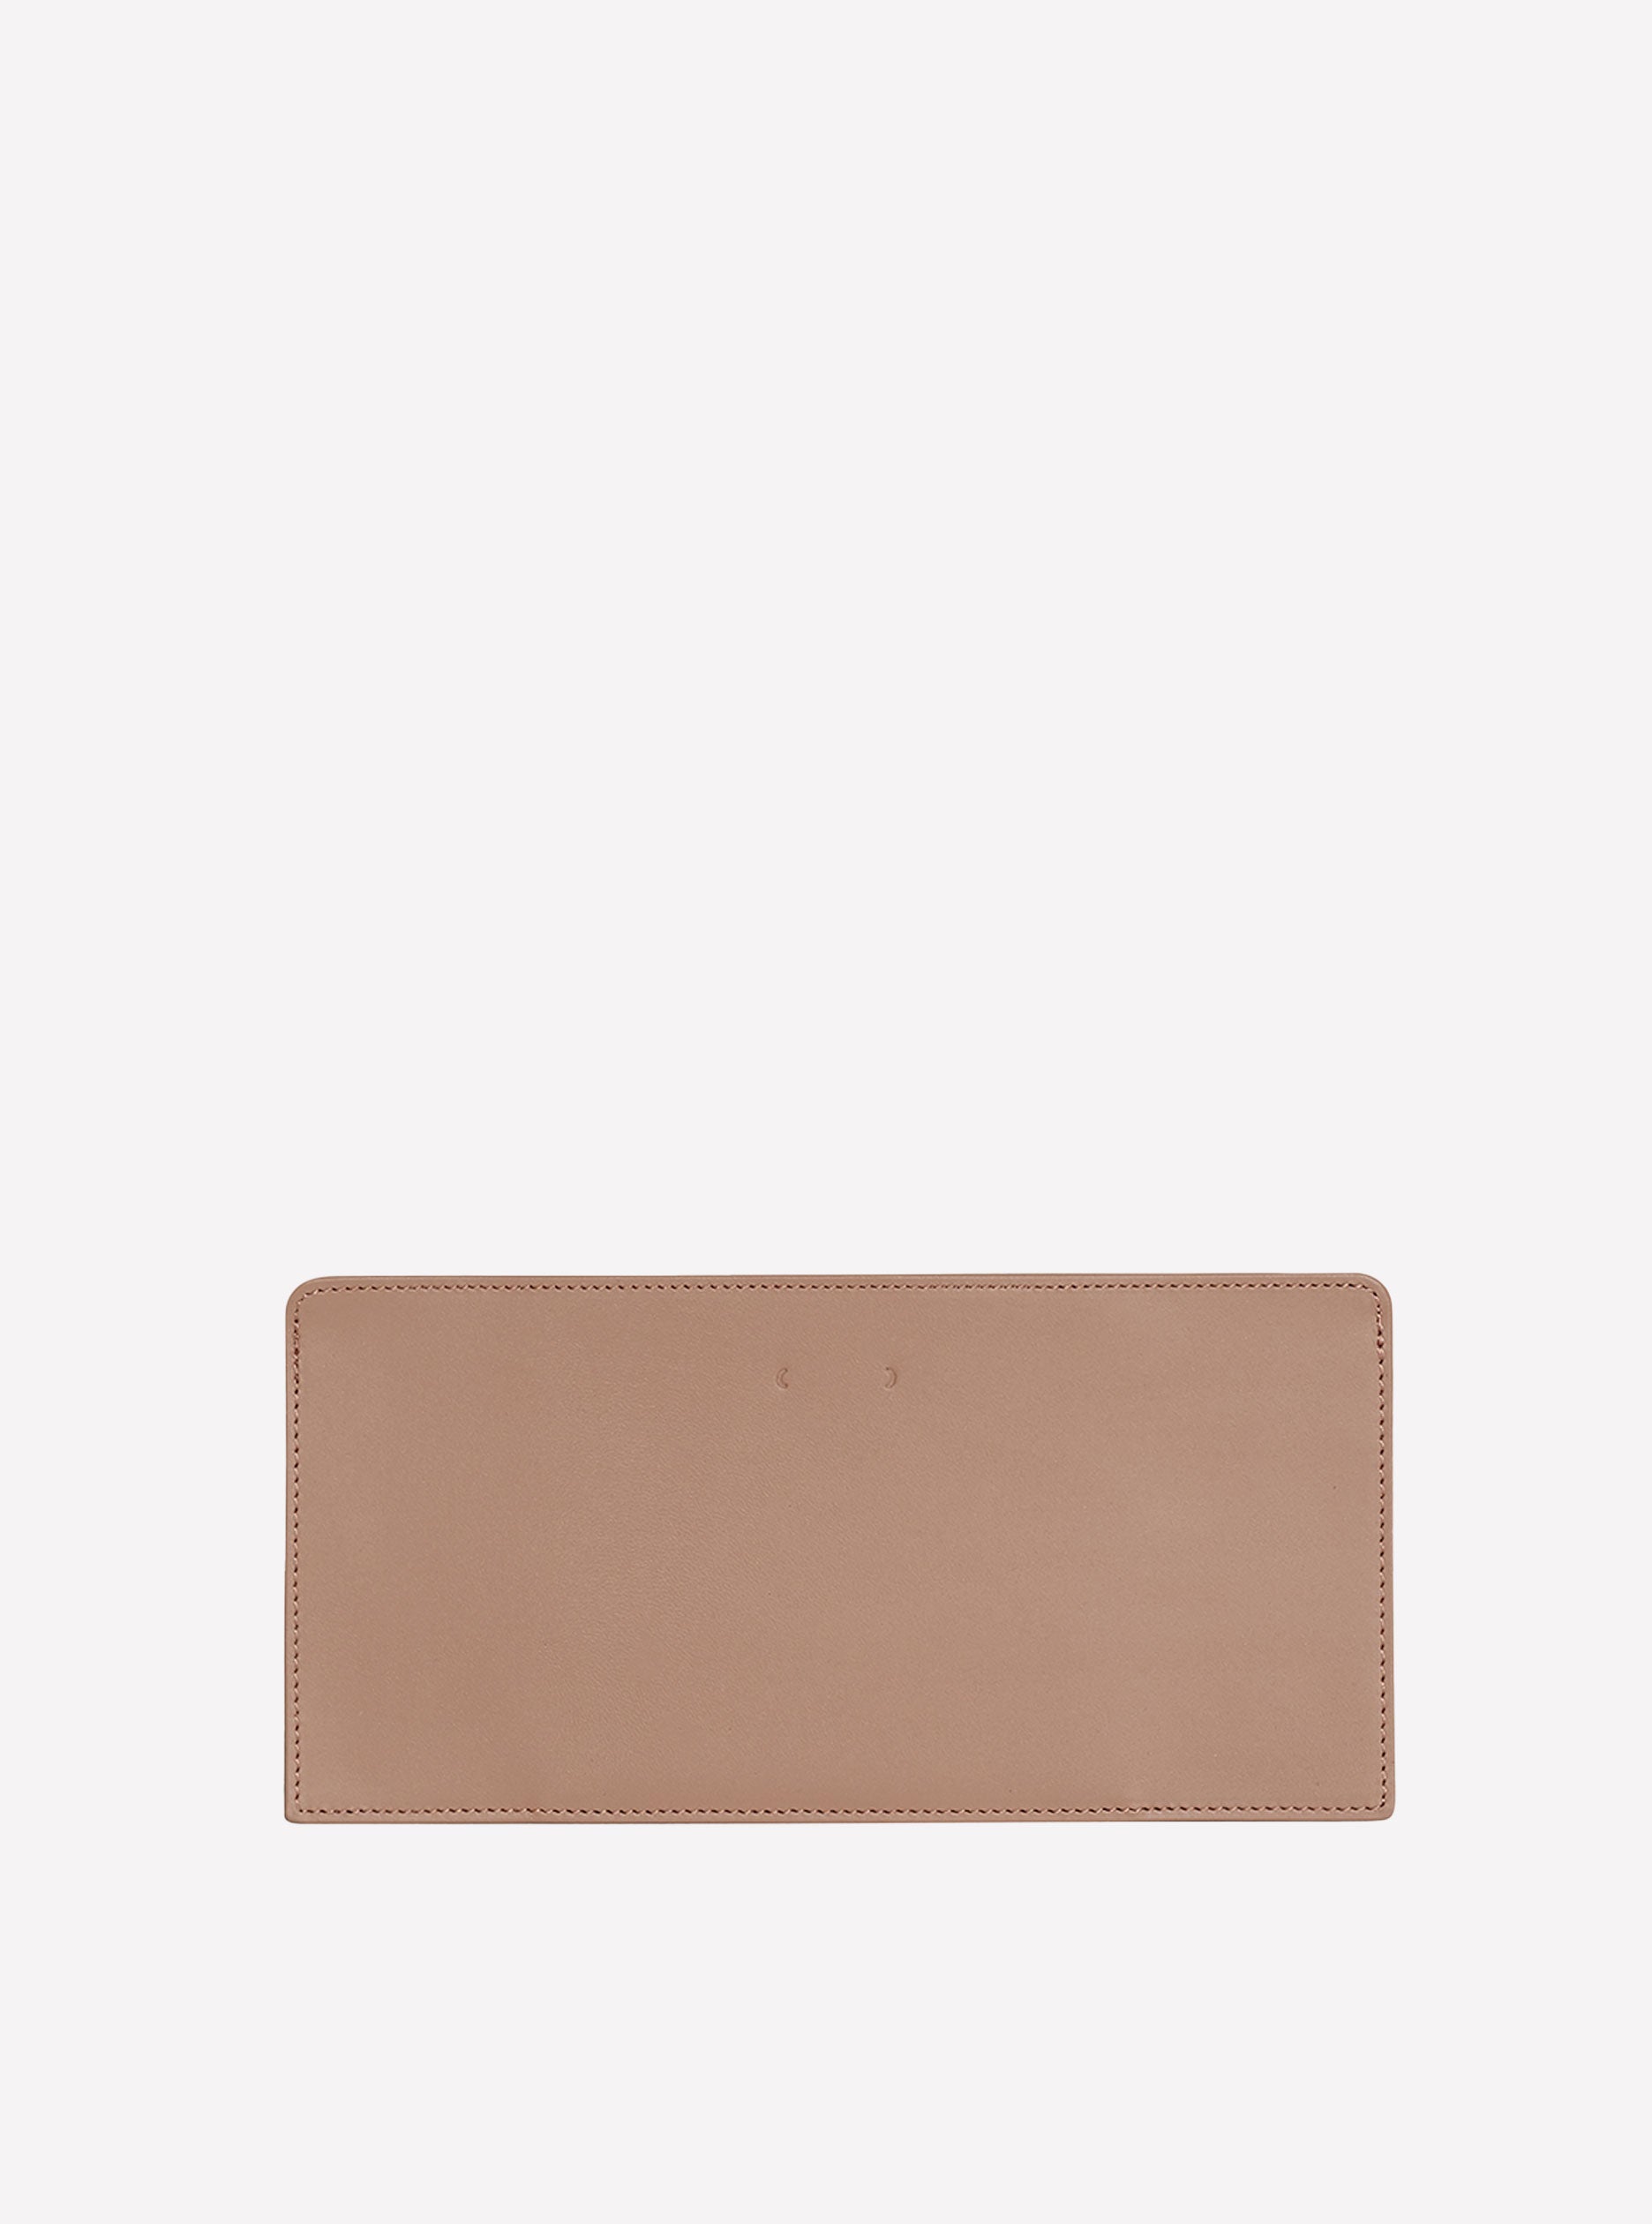 CM 43 in brown card case - PB0110 – PB 0110